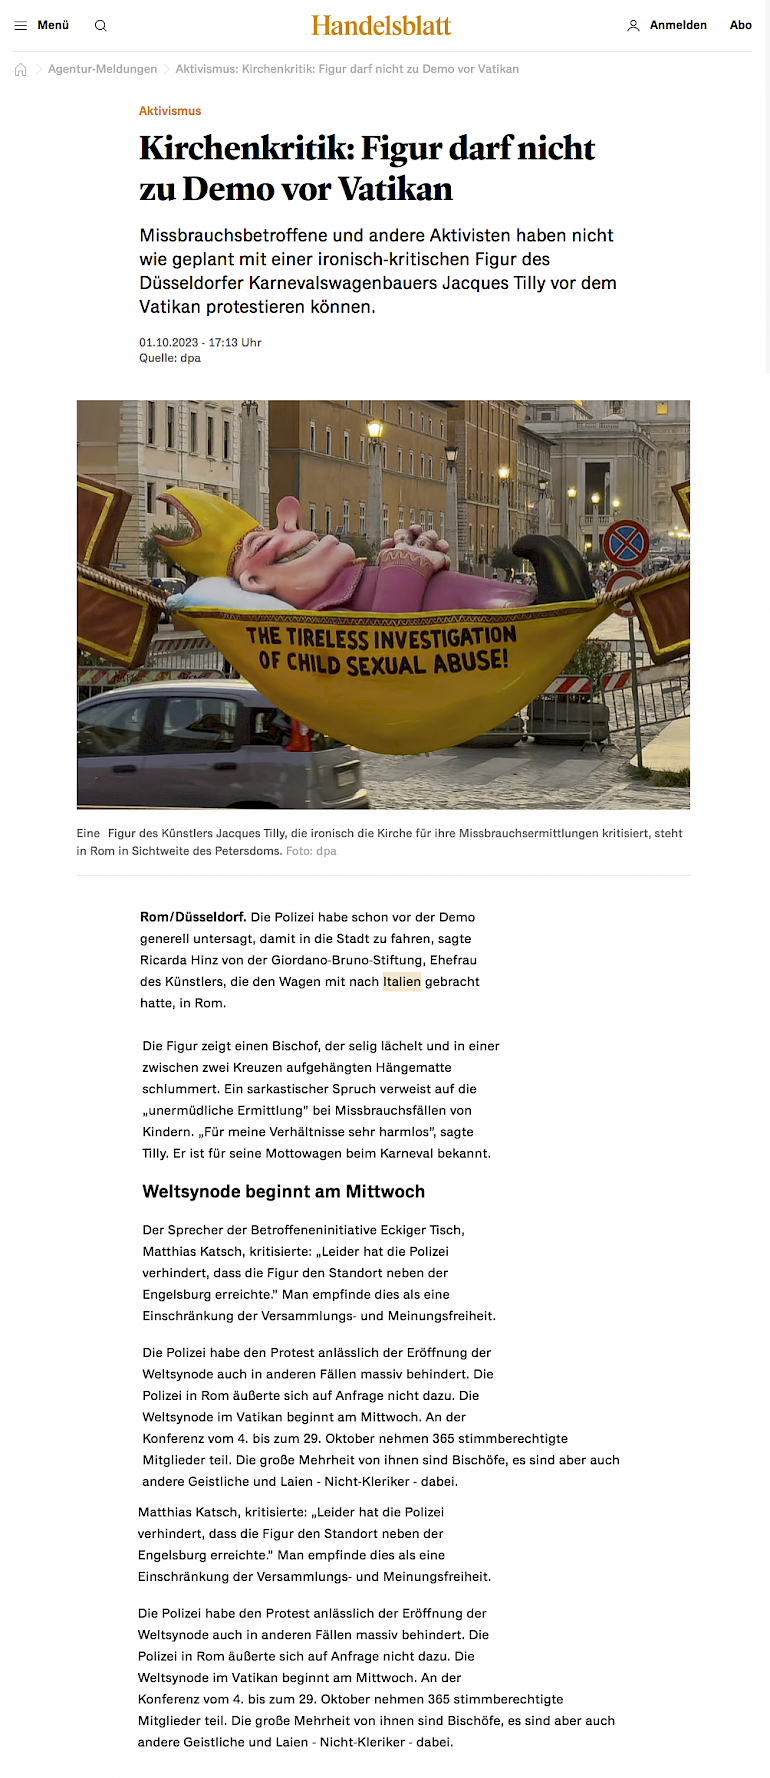 Handelsblatt online, 1.10.2023 [https://www.handelsblatt.com/dpa/aktivismus-kirchenkritik-figur-darf-nicht-zu-demo-vor-vatikan/29422608.html]